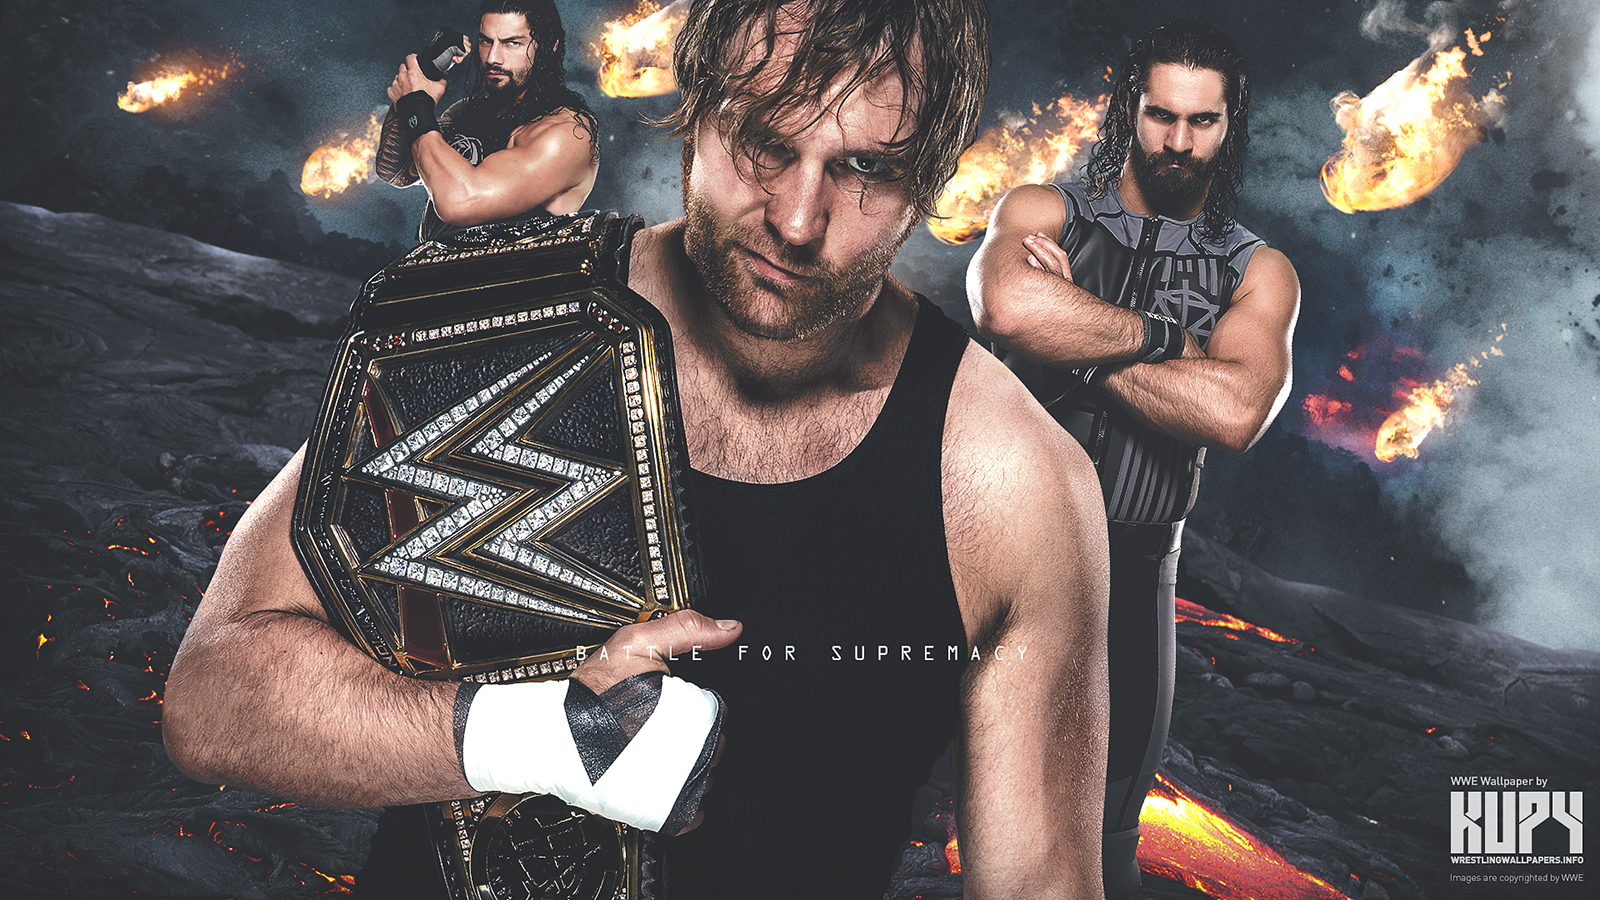 Roman Reigns Xxx Video - NEW Battle for Supremacy: Dean Ambrose (c) vs. Seth Rollins vs. Roman  Reigns WWE Battleground wallpaper - Kupy Wrestling Wallpapers